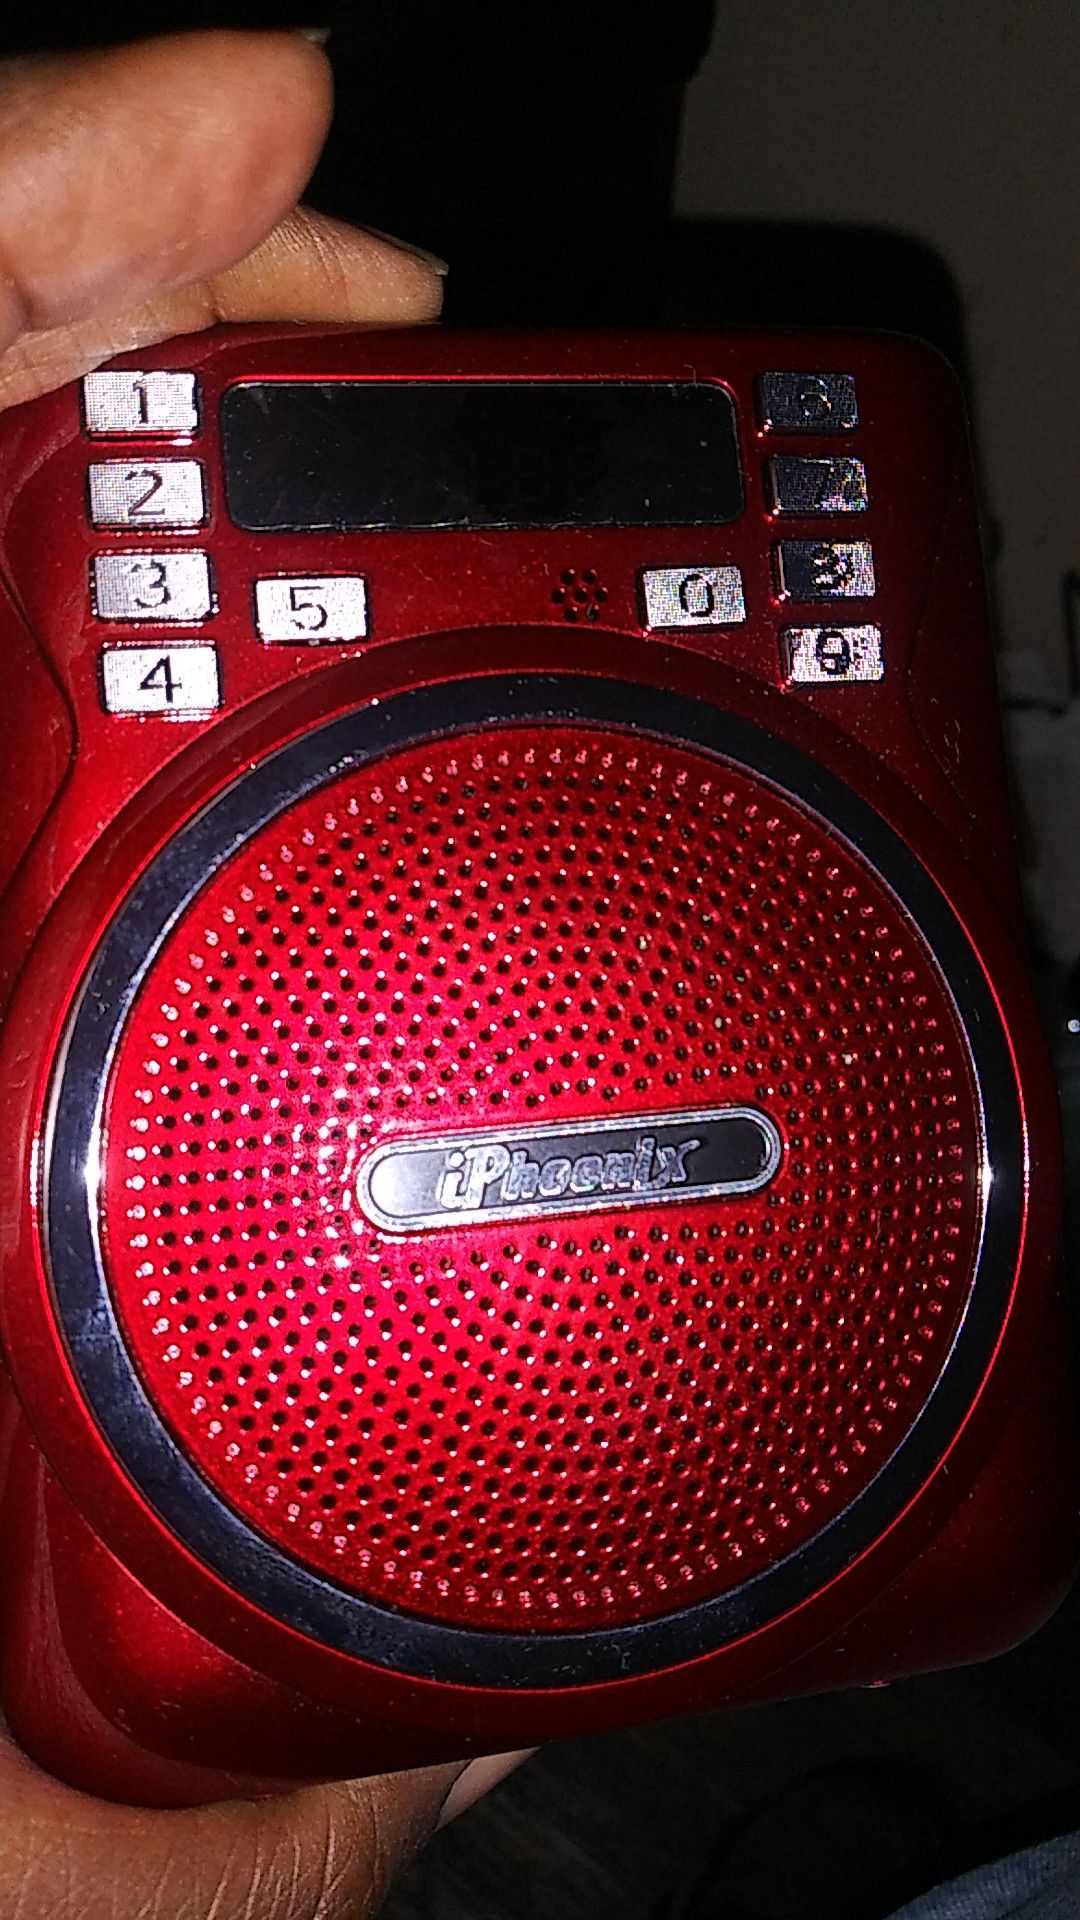 Iphoenix Bluetooth radio speakers as a battery speaker